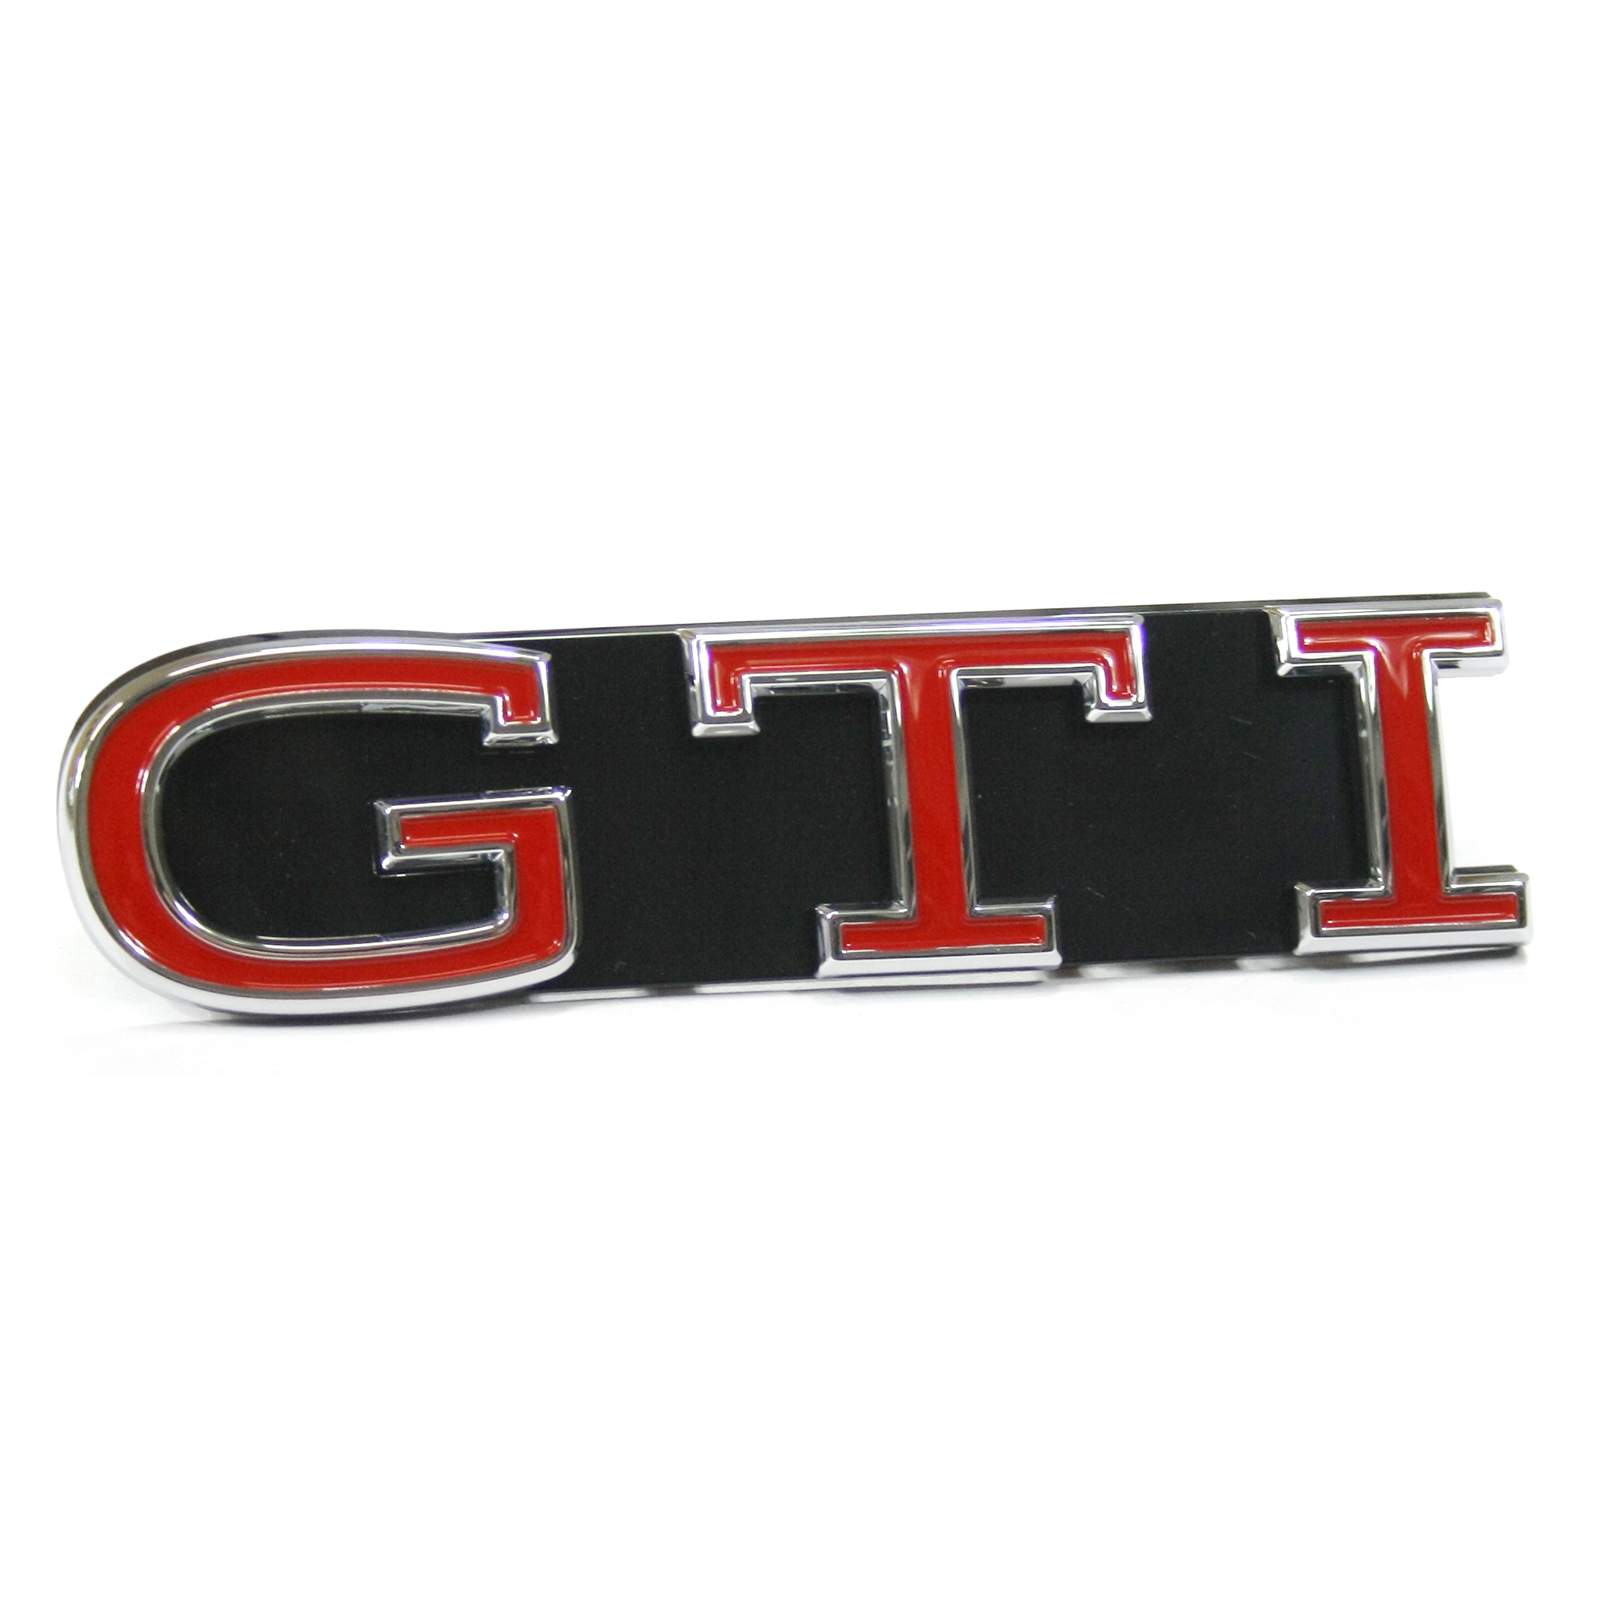 Emblema anteriore logo Gti originale Volkswagen Golf 7.5 (5G)